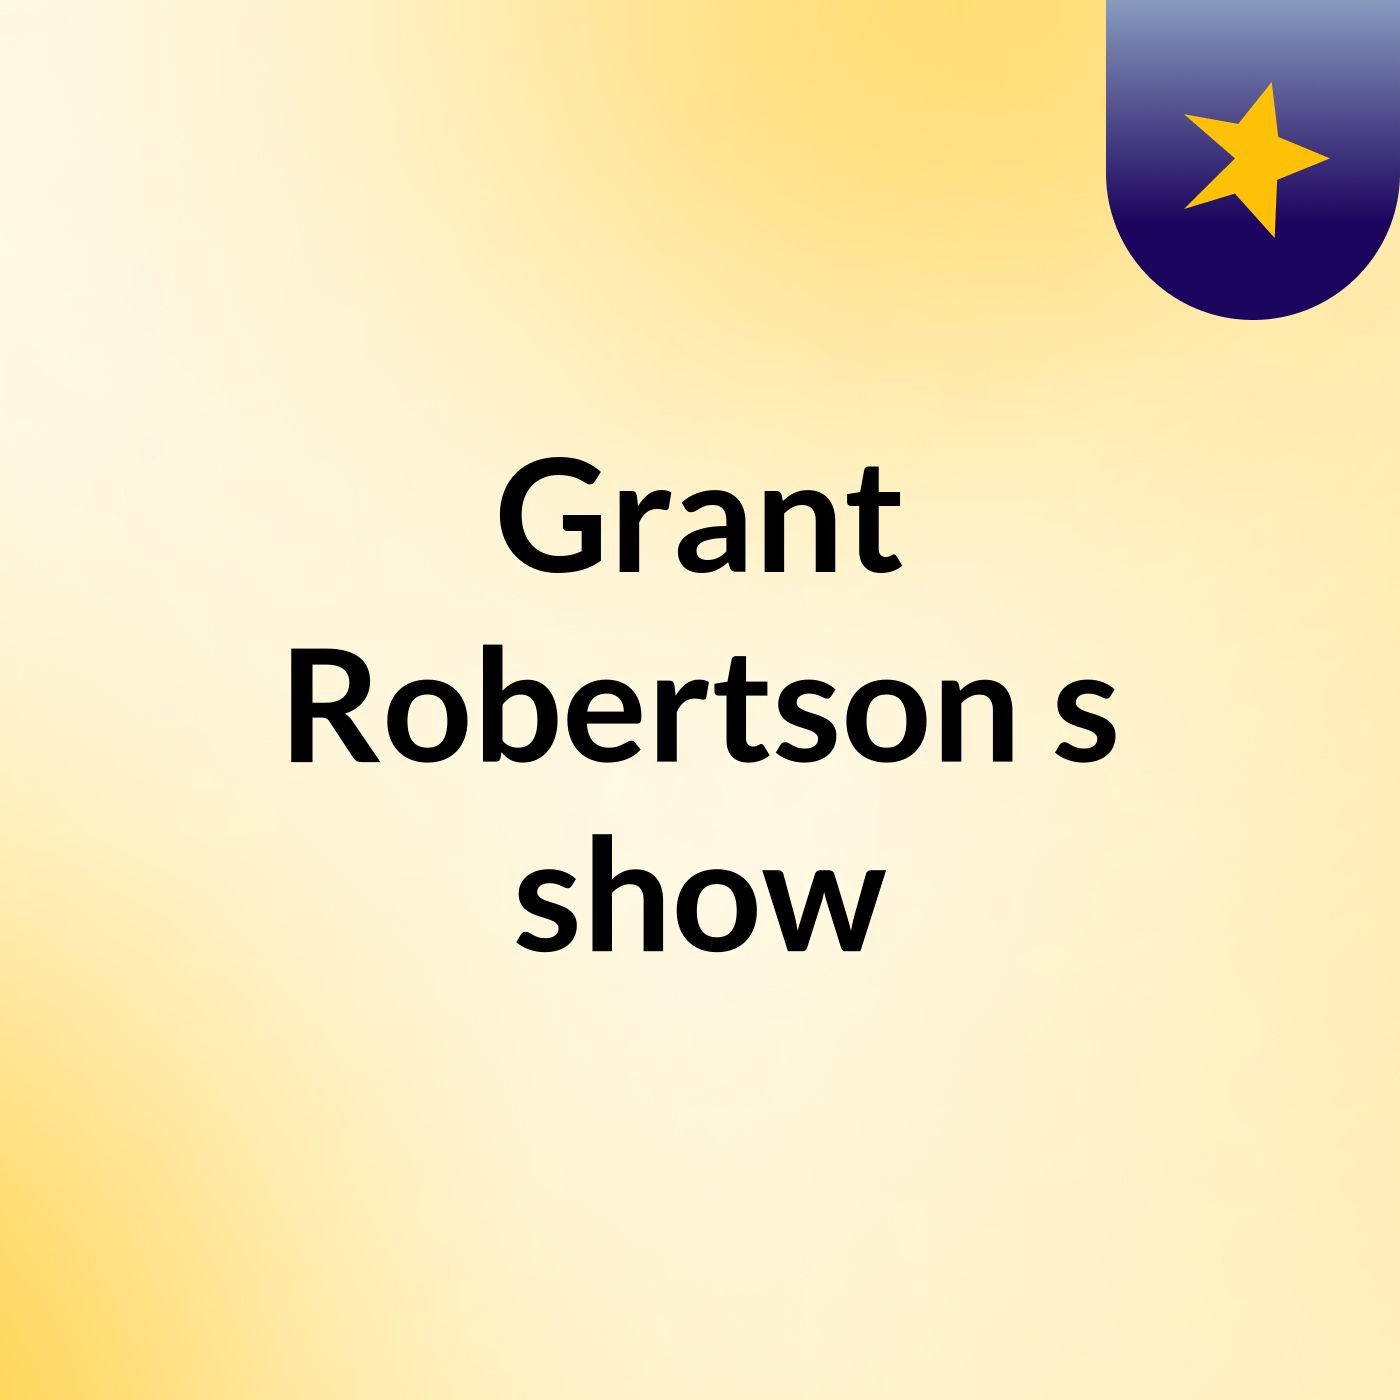 Episode 2 - Grant Robertson's show